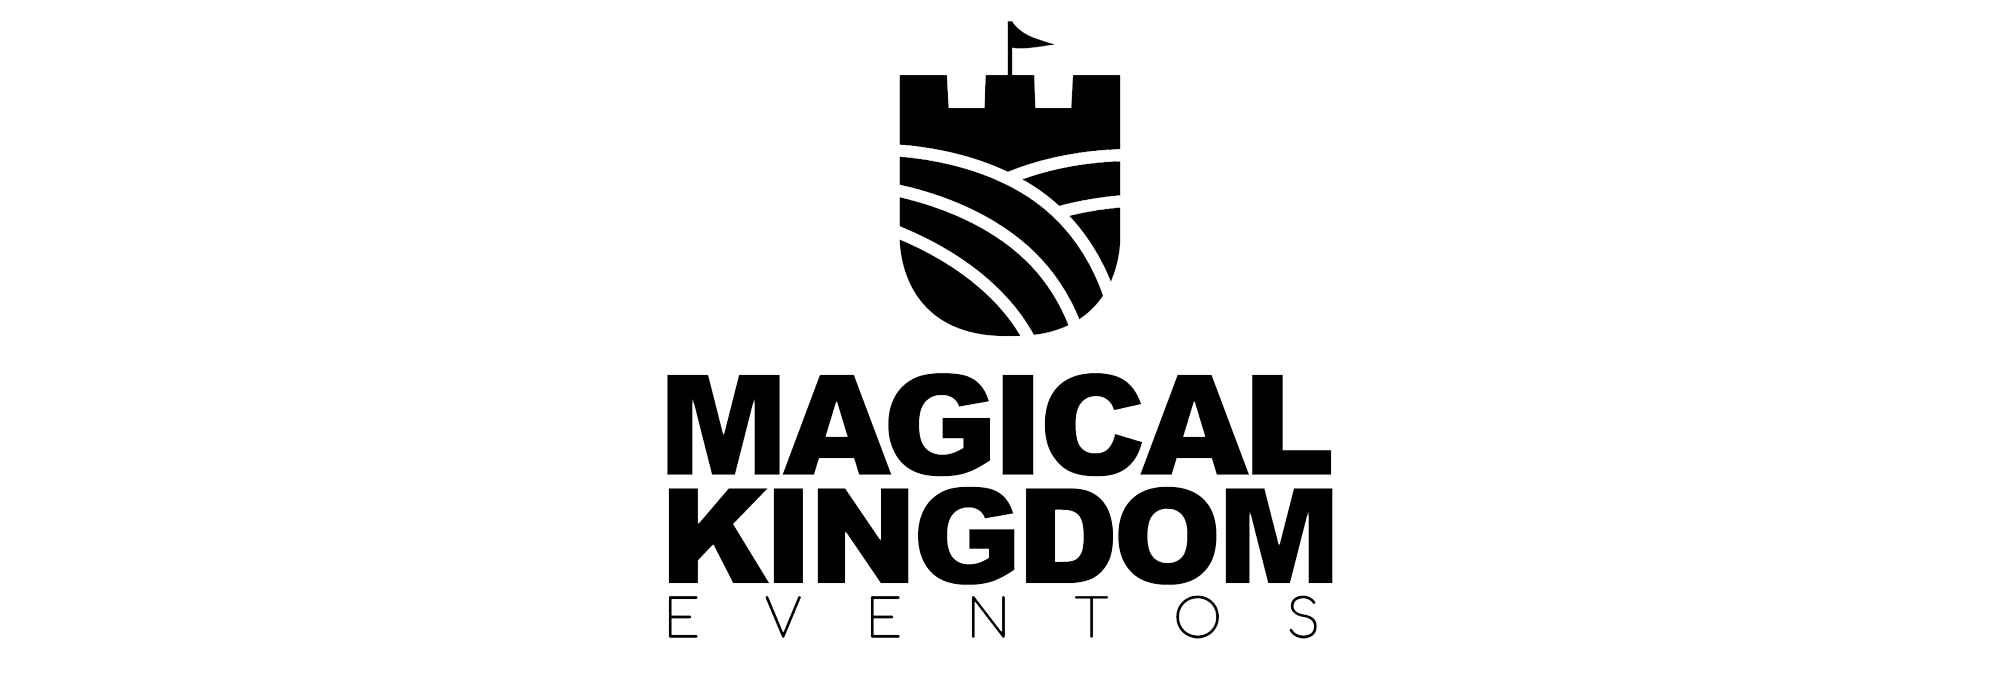 Magical kingdom